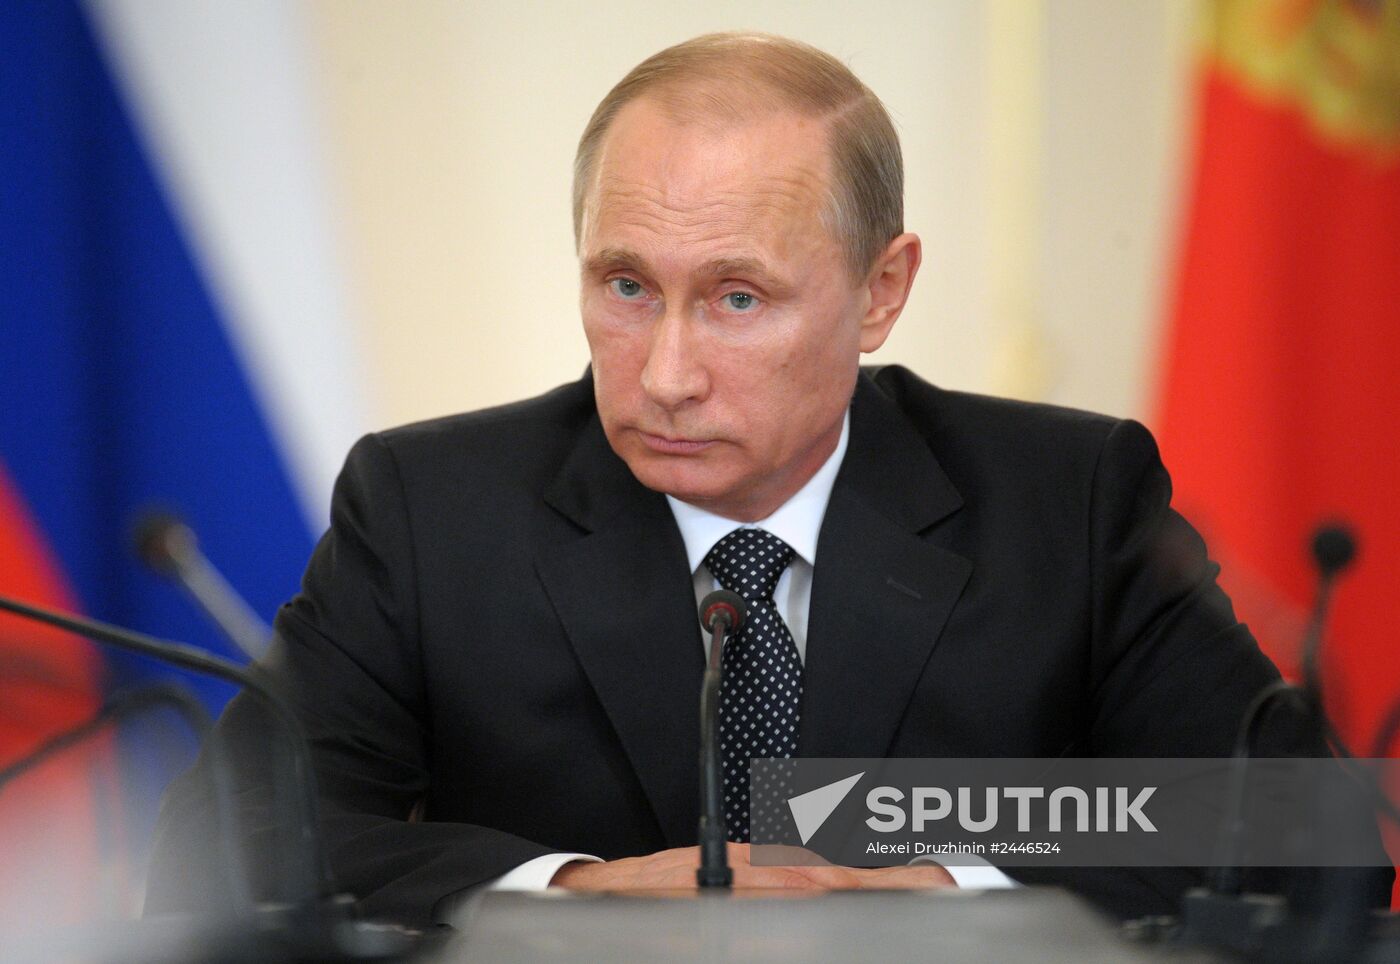 Vladimir Putin chairs Government meeting